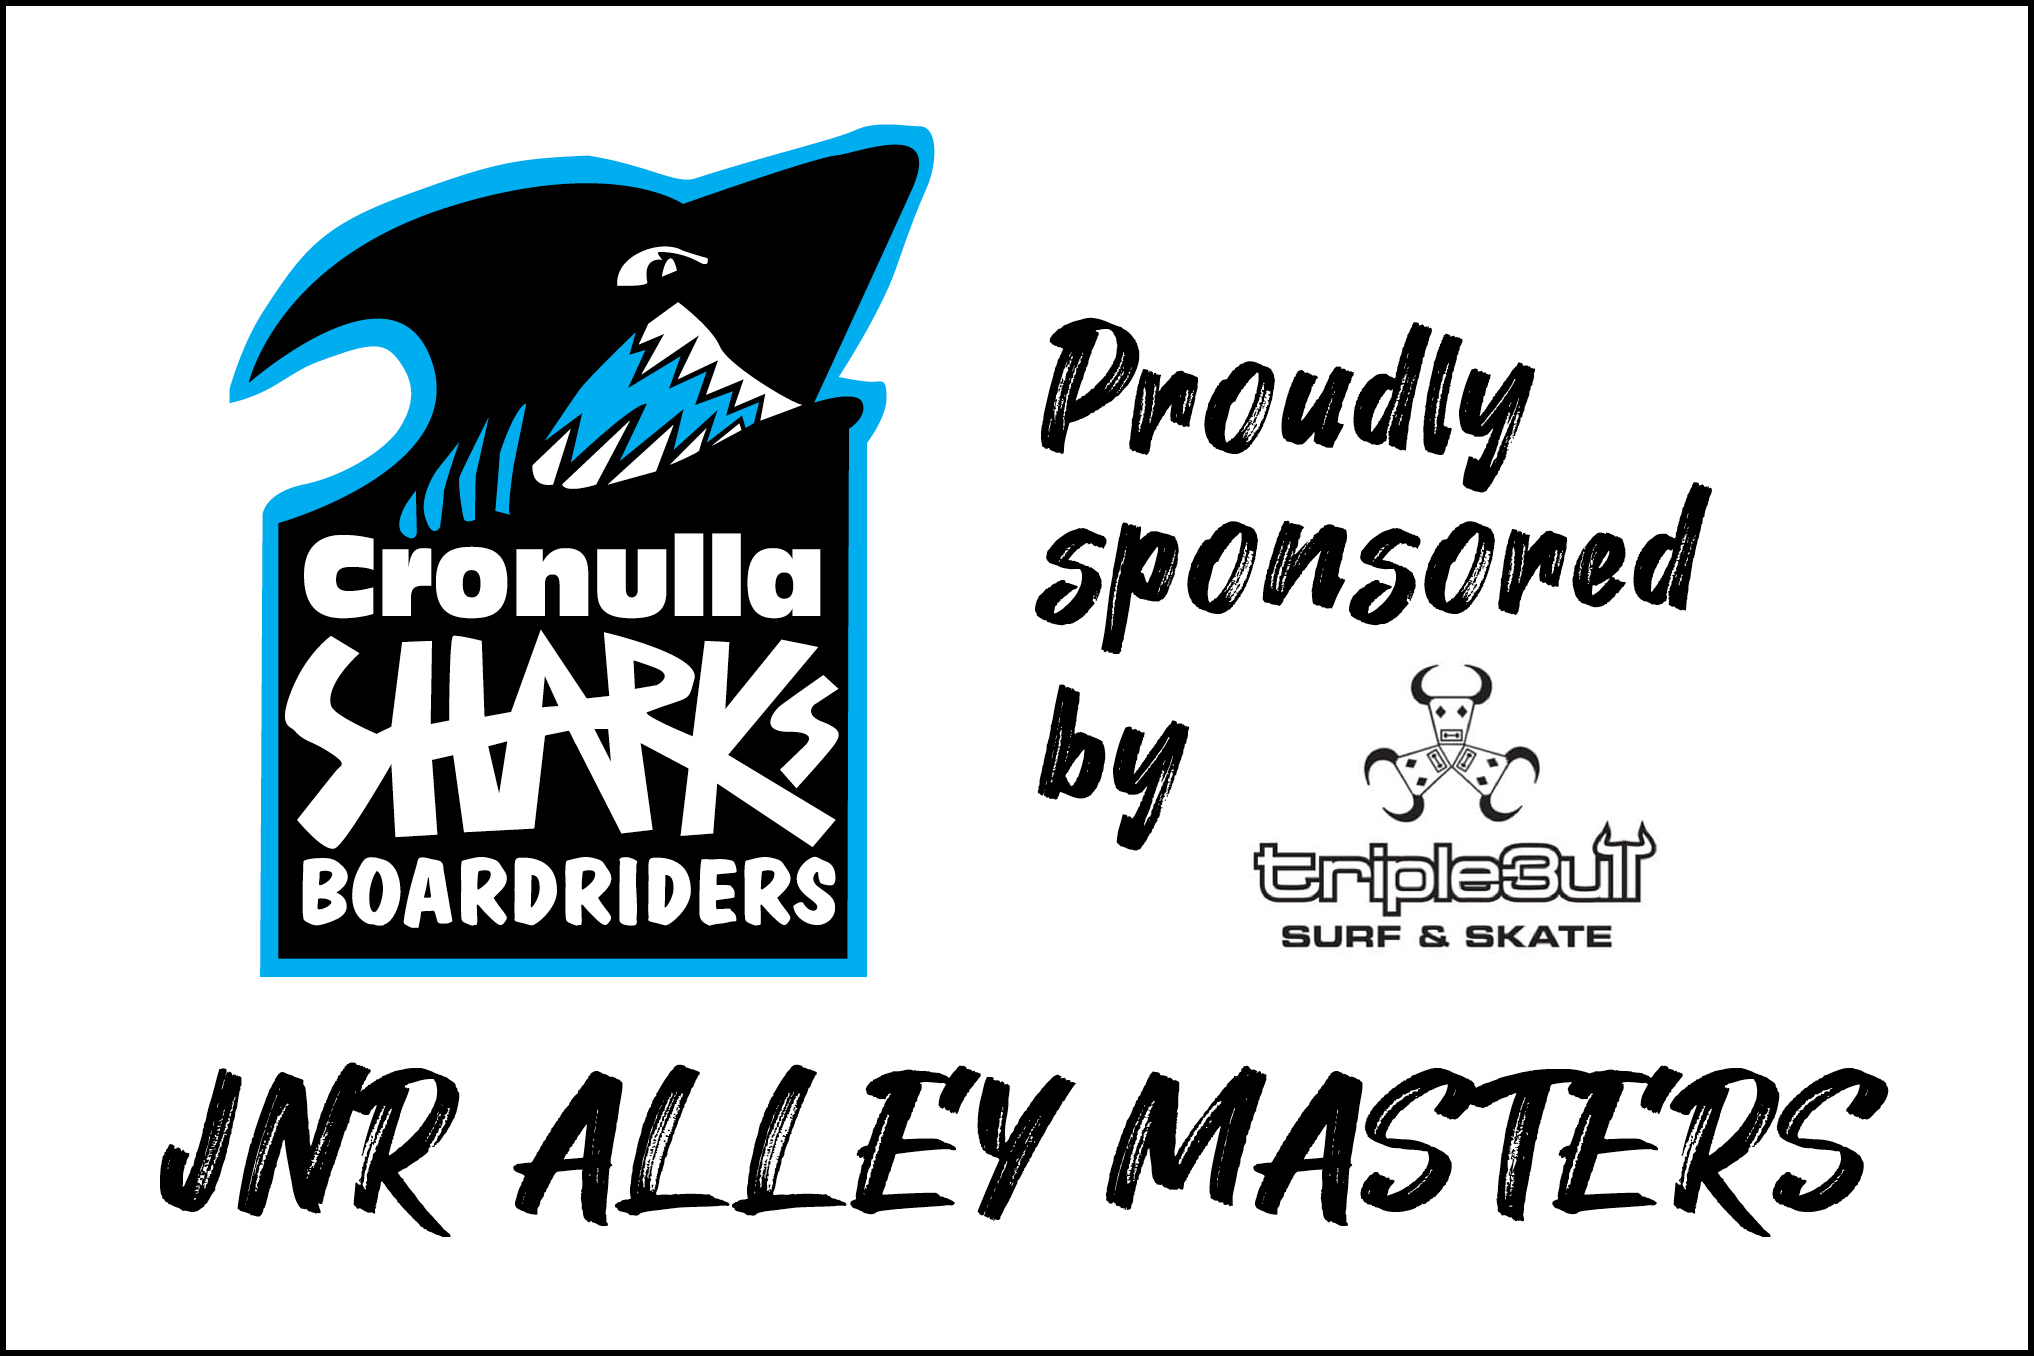 Cronulla Sharks Boardriders Junior Alley Masters Triple Bull